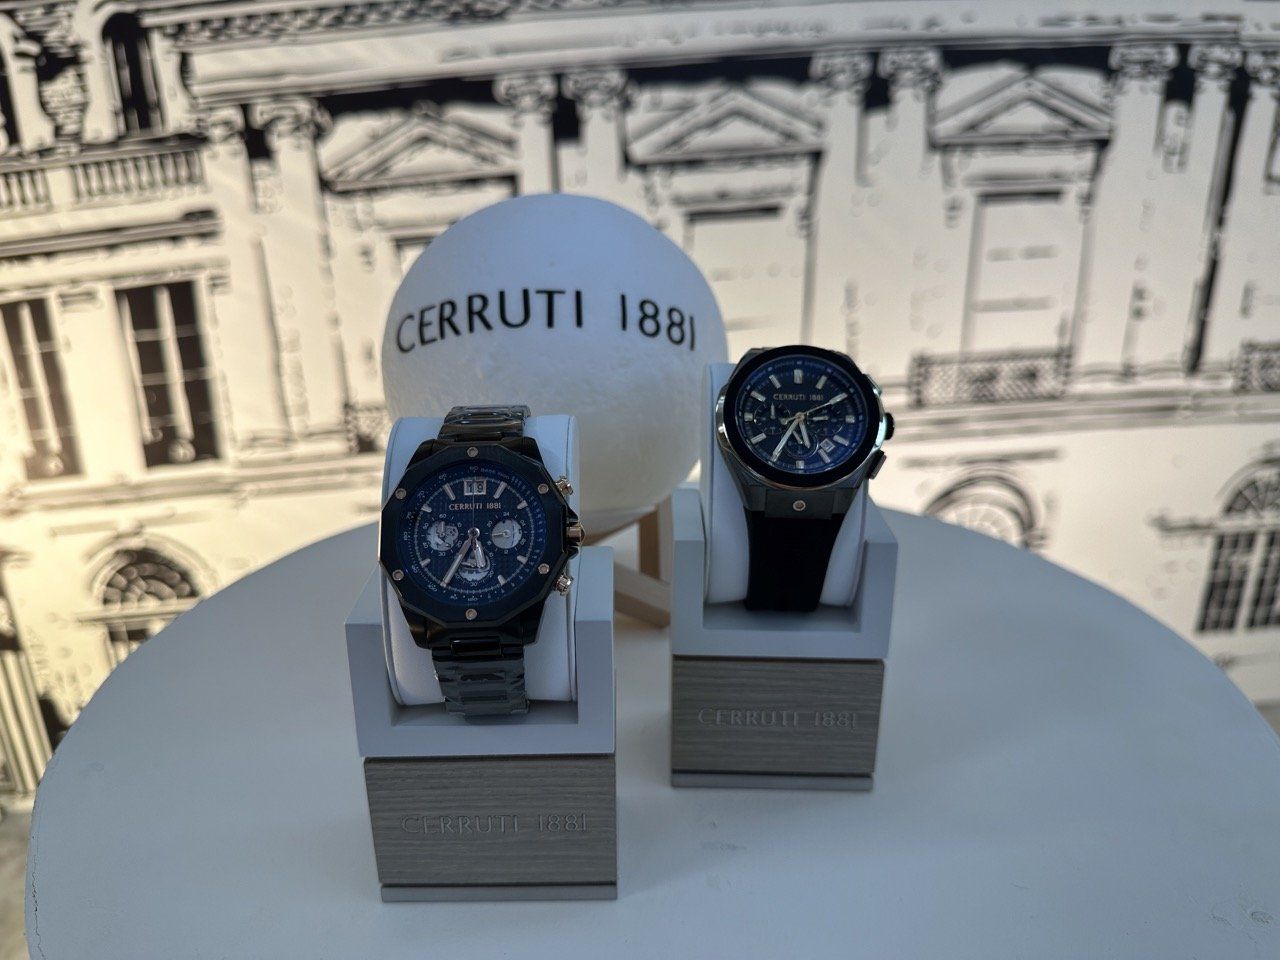 Cerruti watches